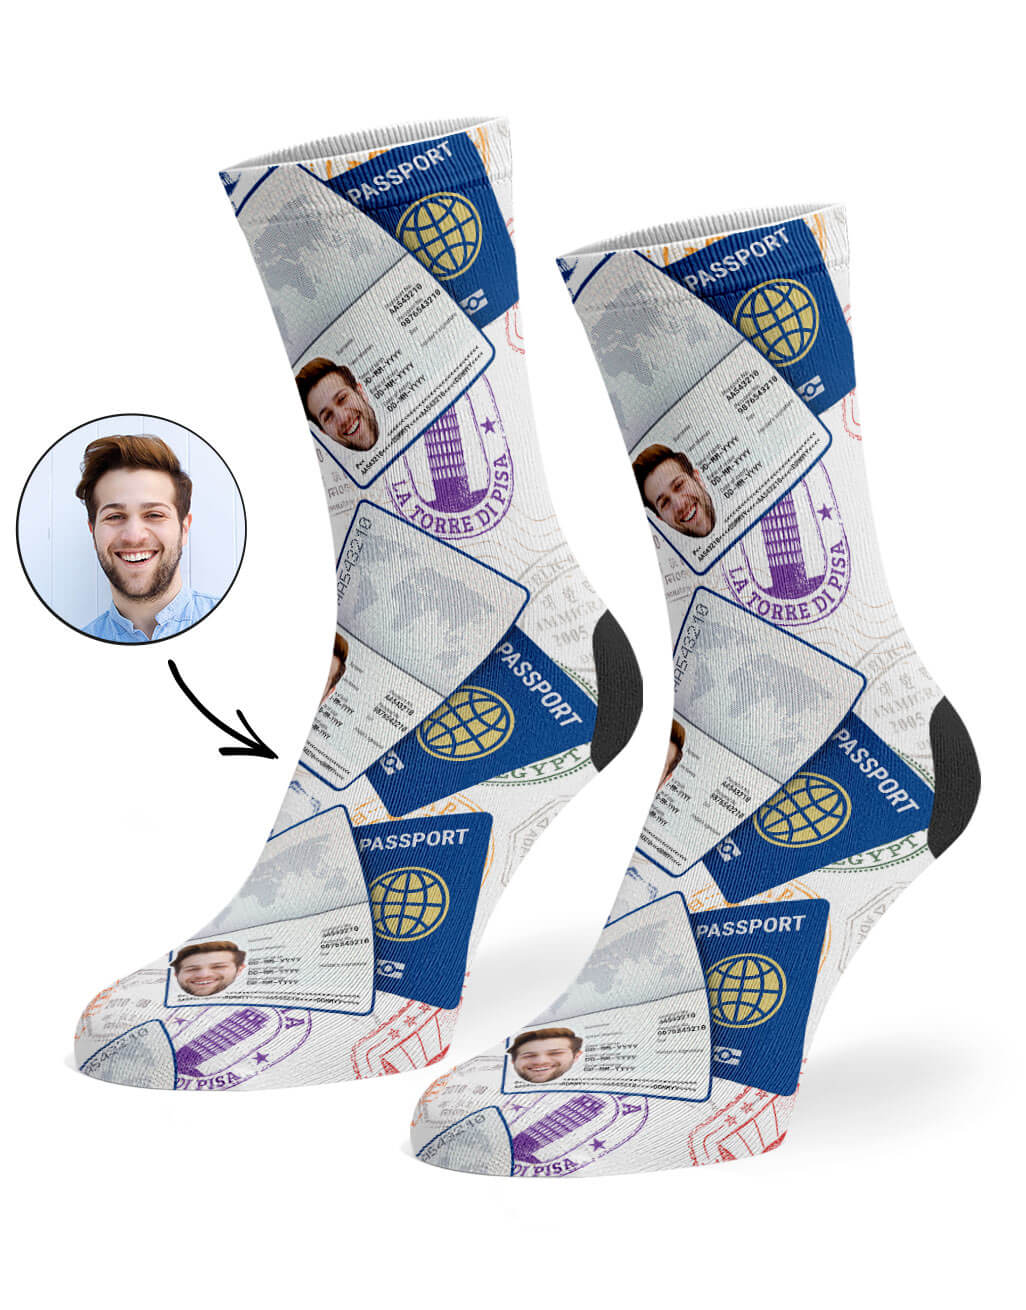 Passport Face Custom Socks